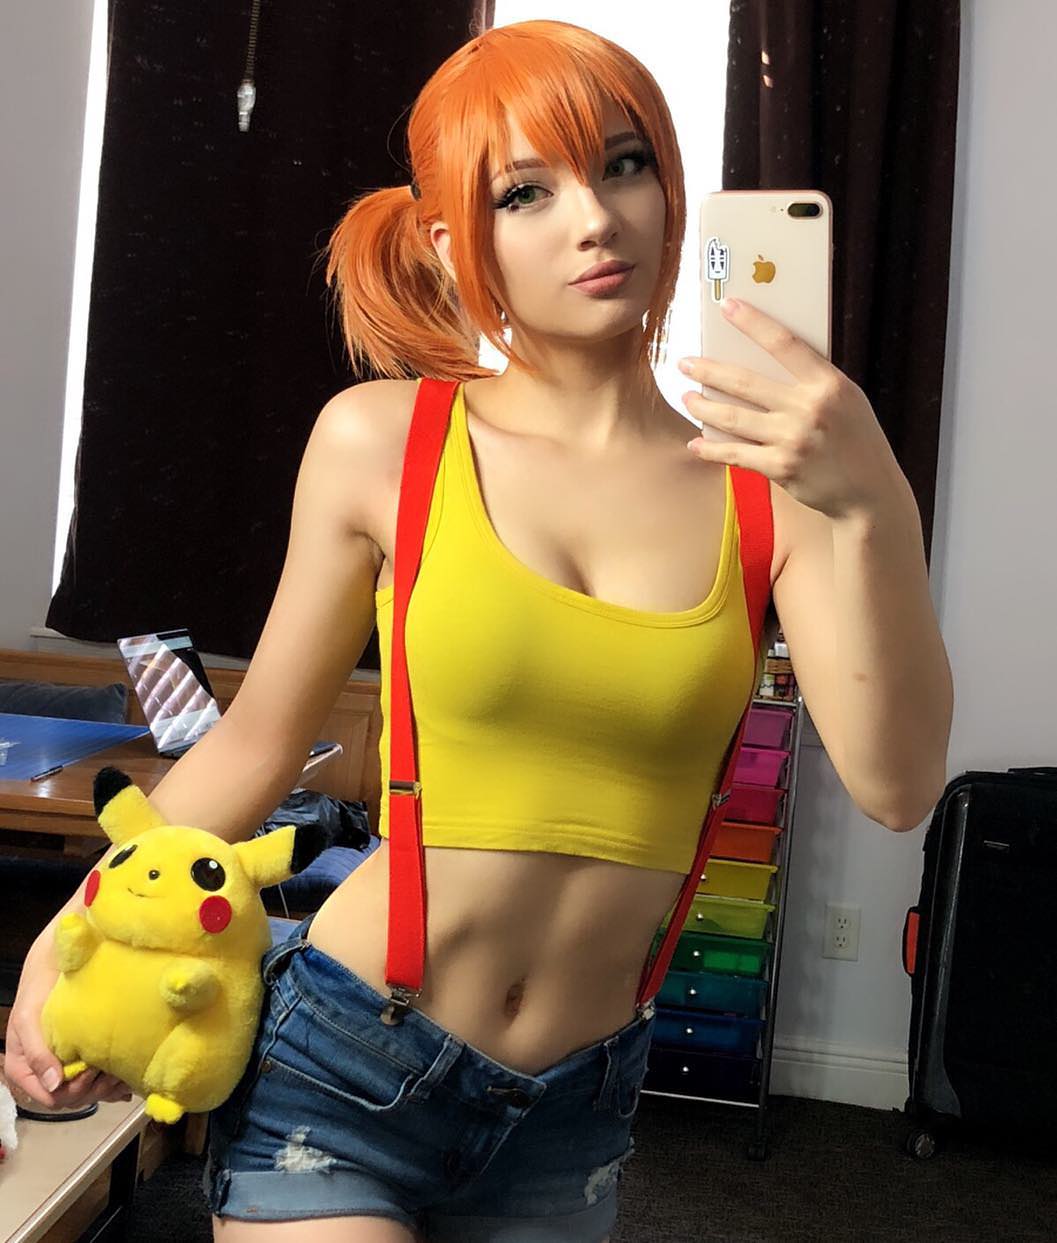 alexis gates share pokemon misty sexy cosplay photos